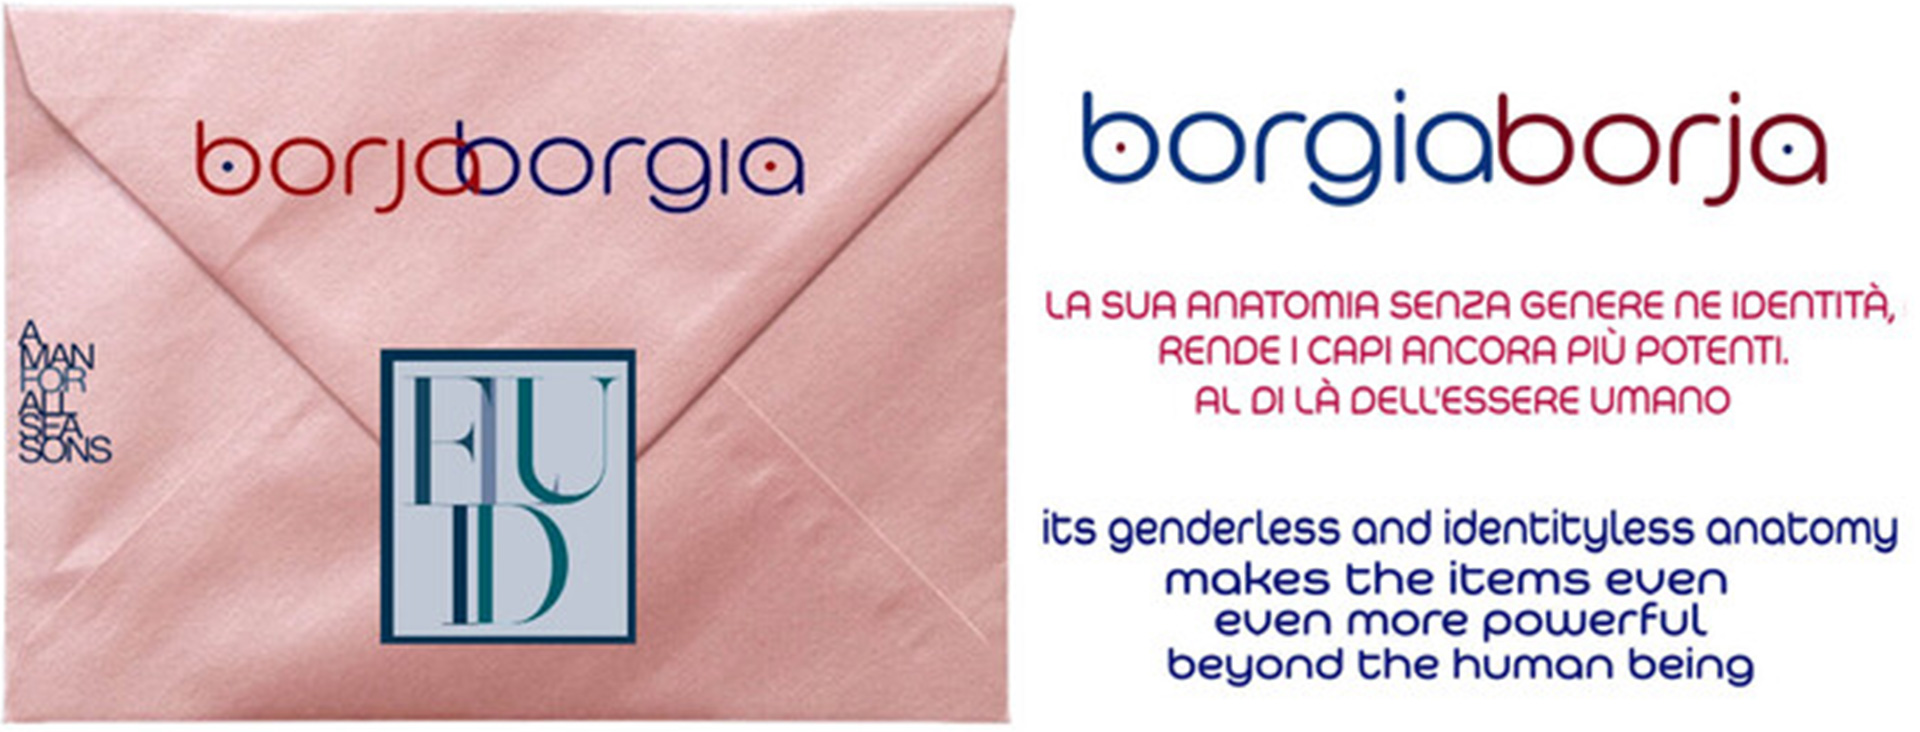 Borgia 14